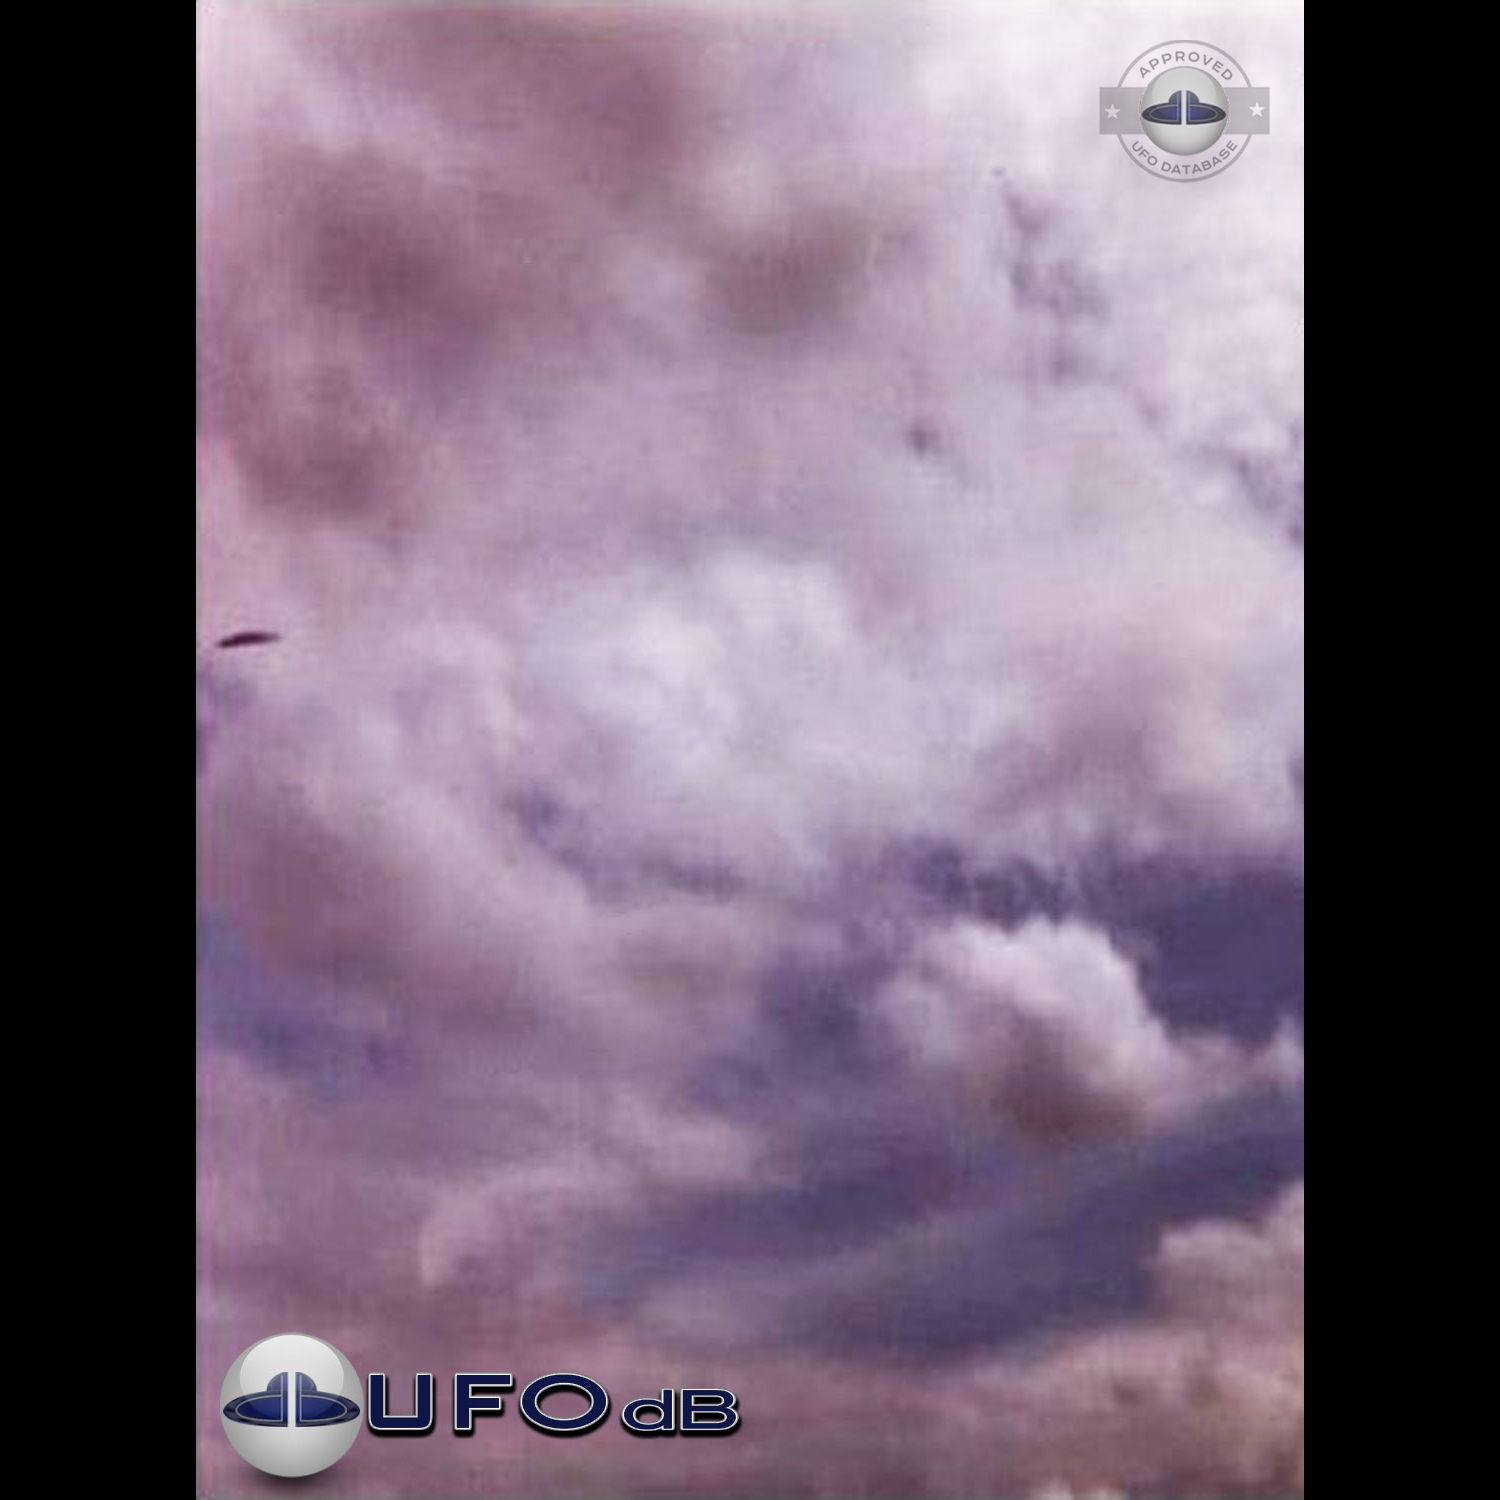 Rudi Nagora heard a strange noise and saw a shinning silver UFO UFO Picture #81-1